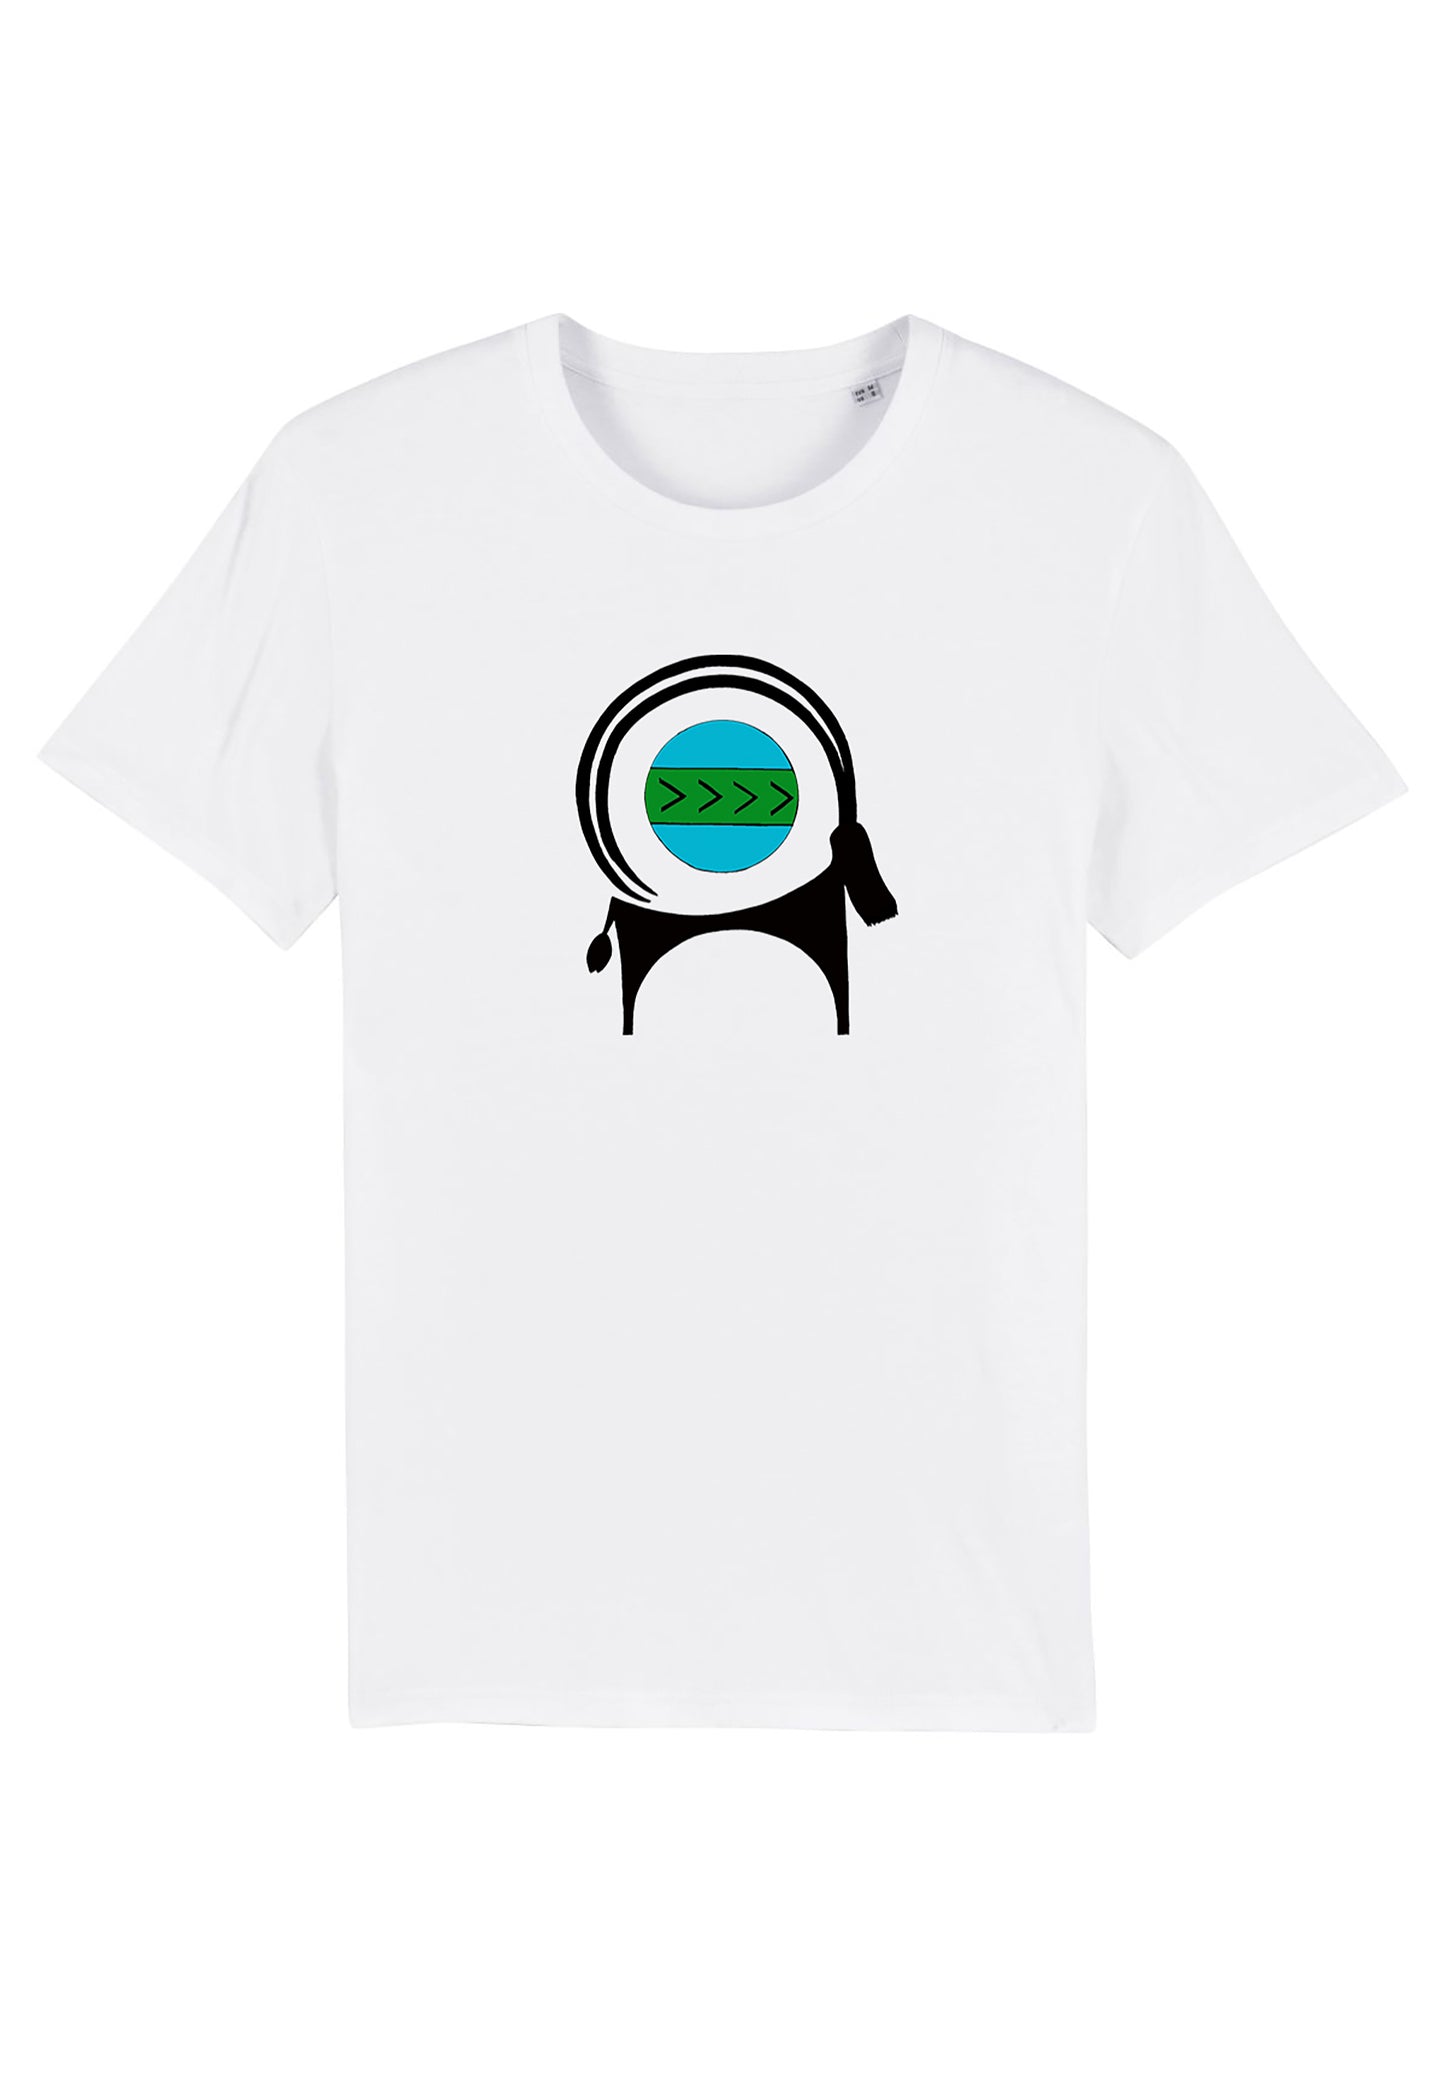 CAPRA-Tee Unisex T-shirt , Printed T-shirt in White  Cotton Jersey